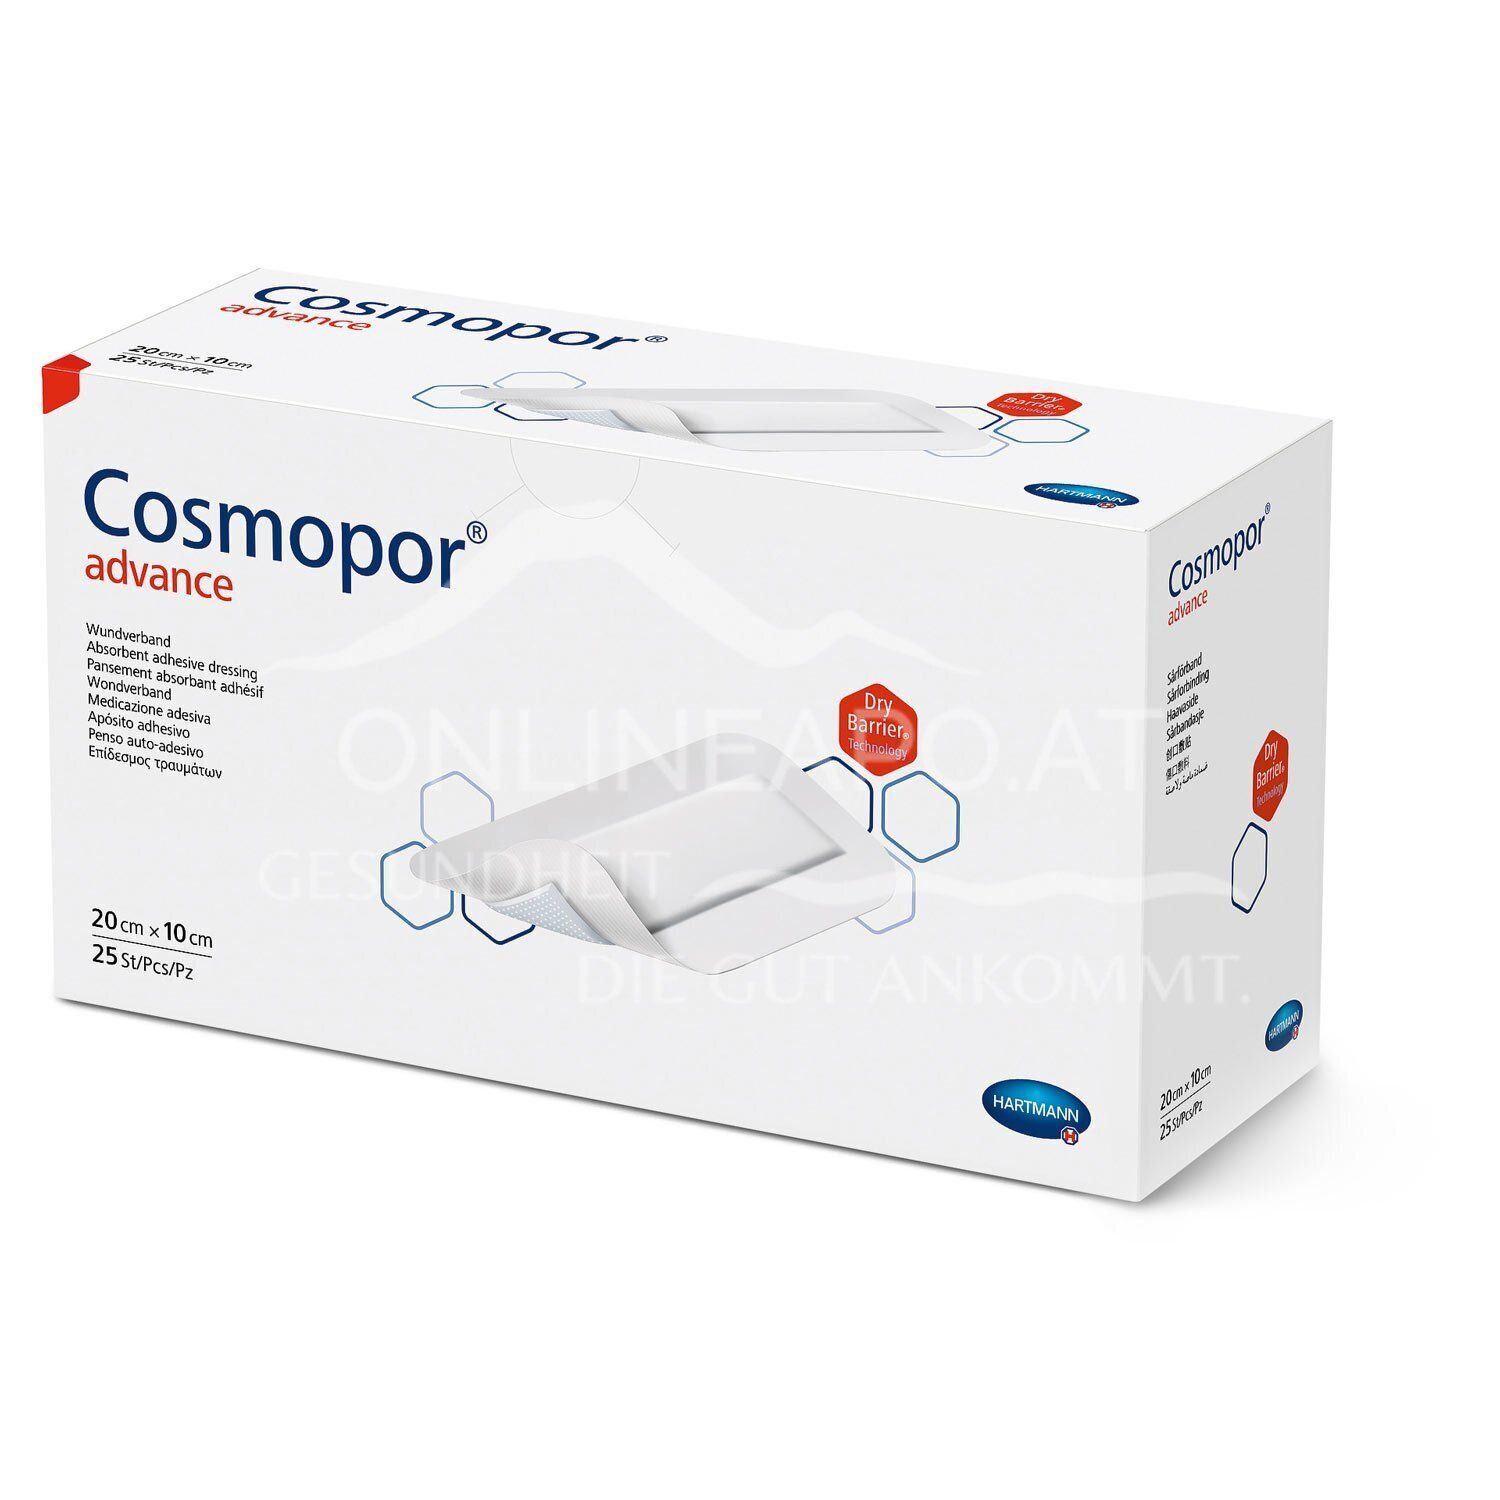 Cosmopor® Advance Wundverband 20 x 10 cm